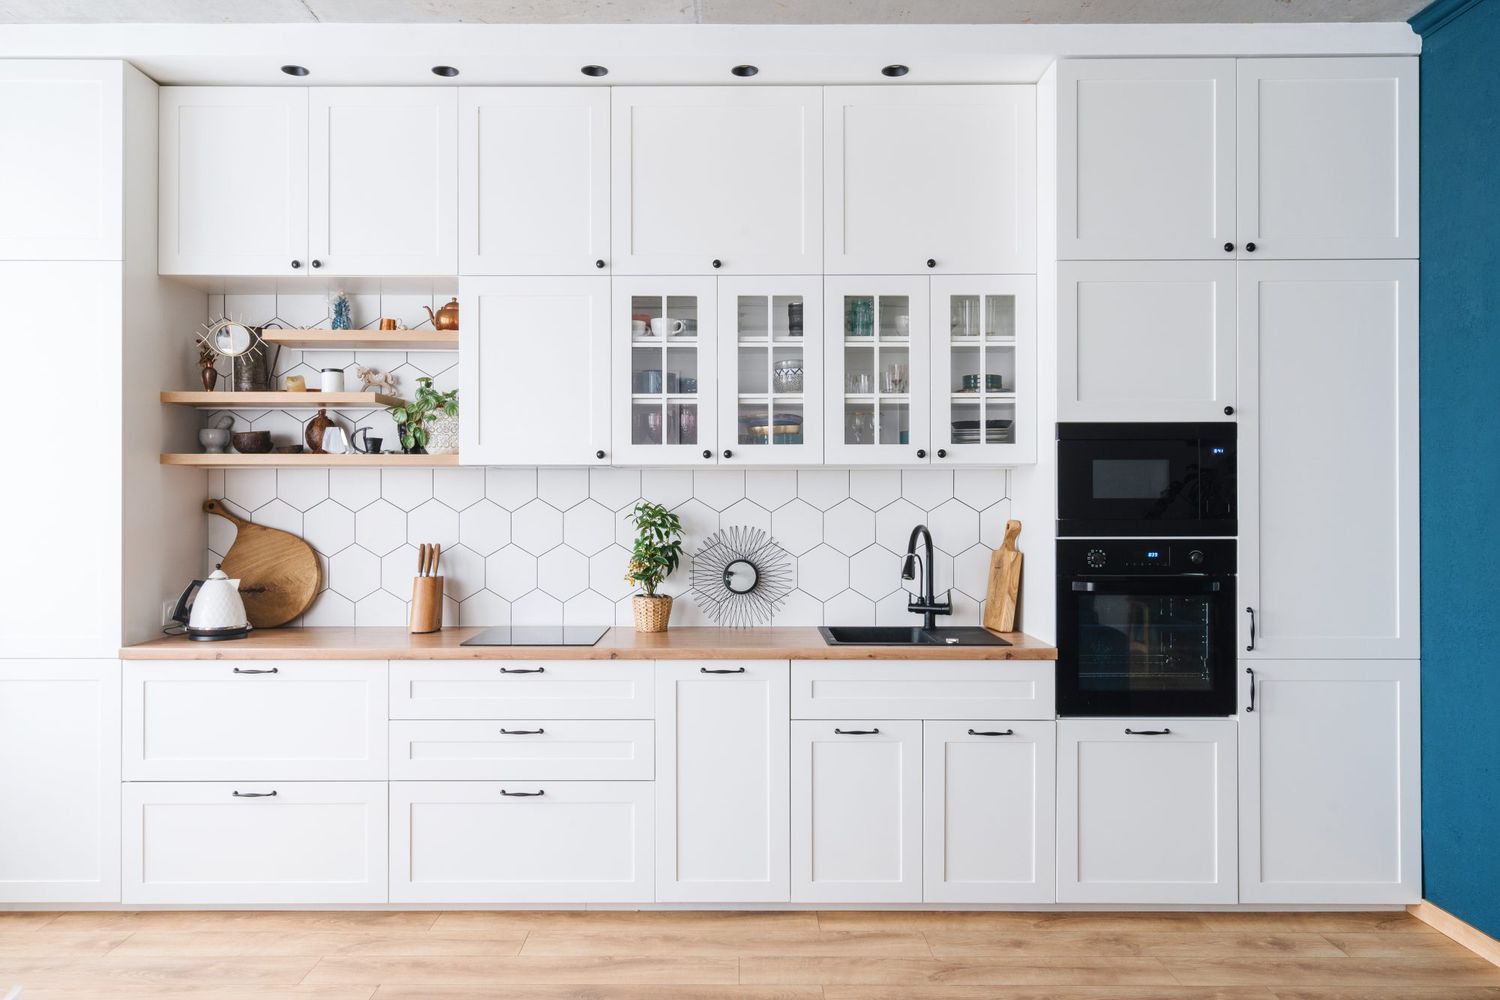 Contemporary kitchen interior design with stylish furniture,